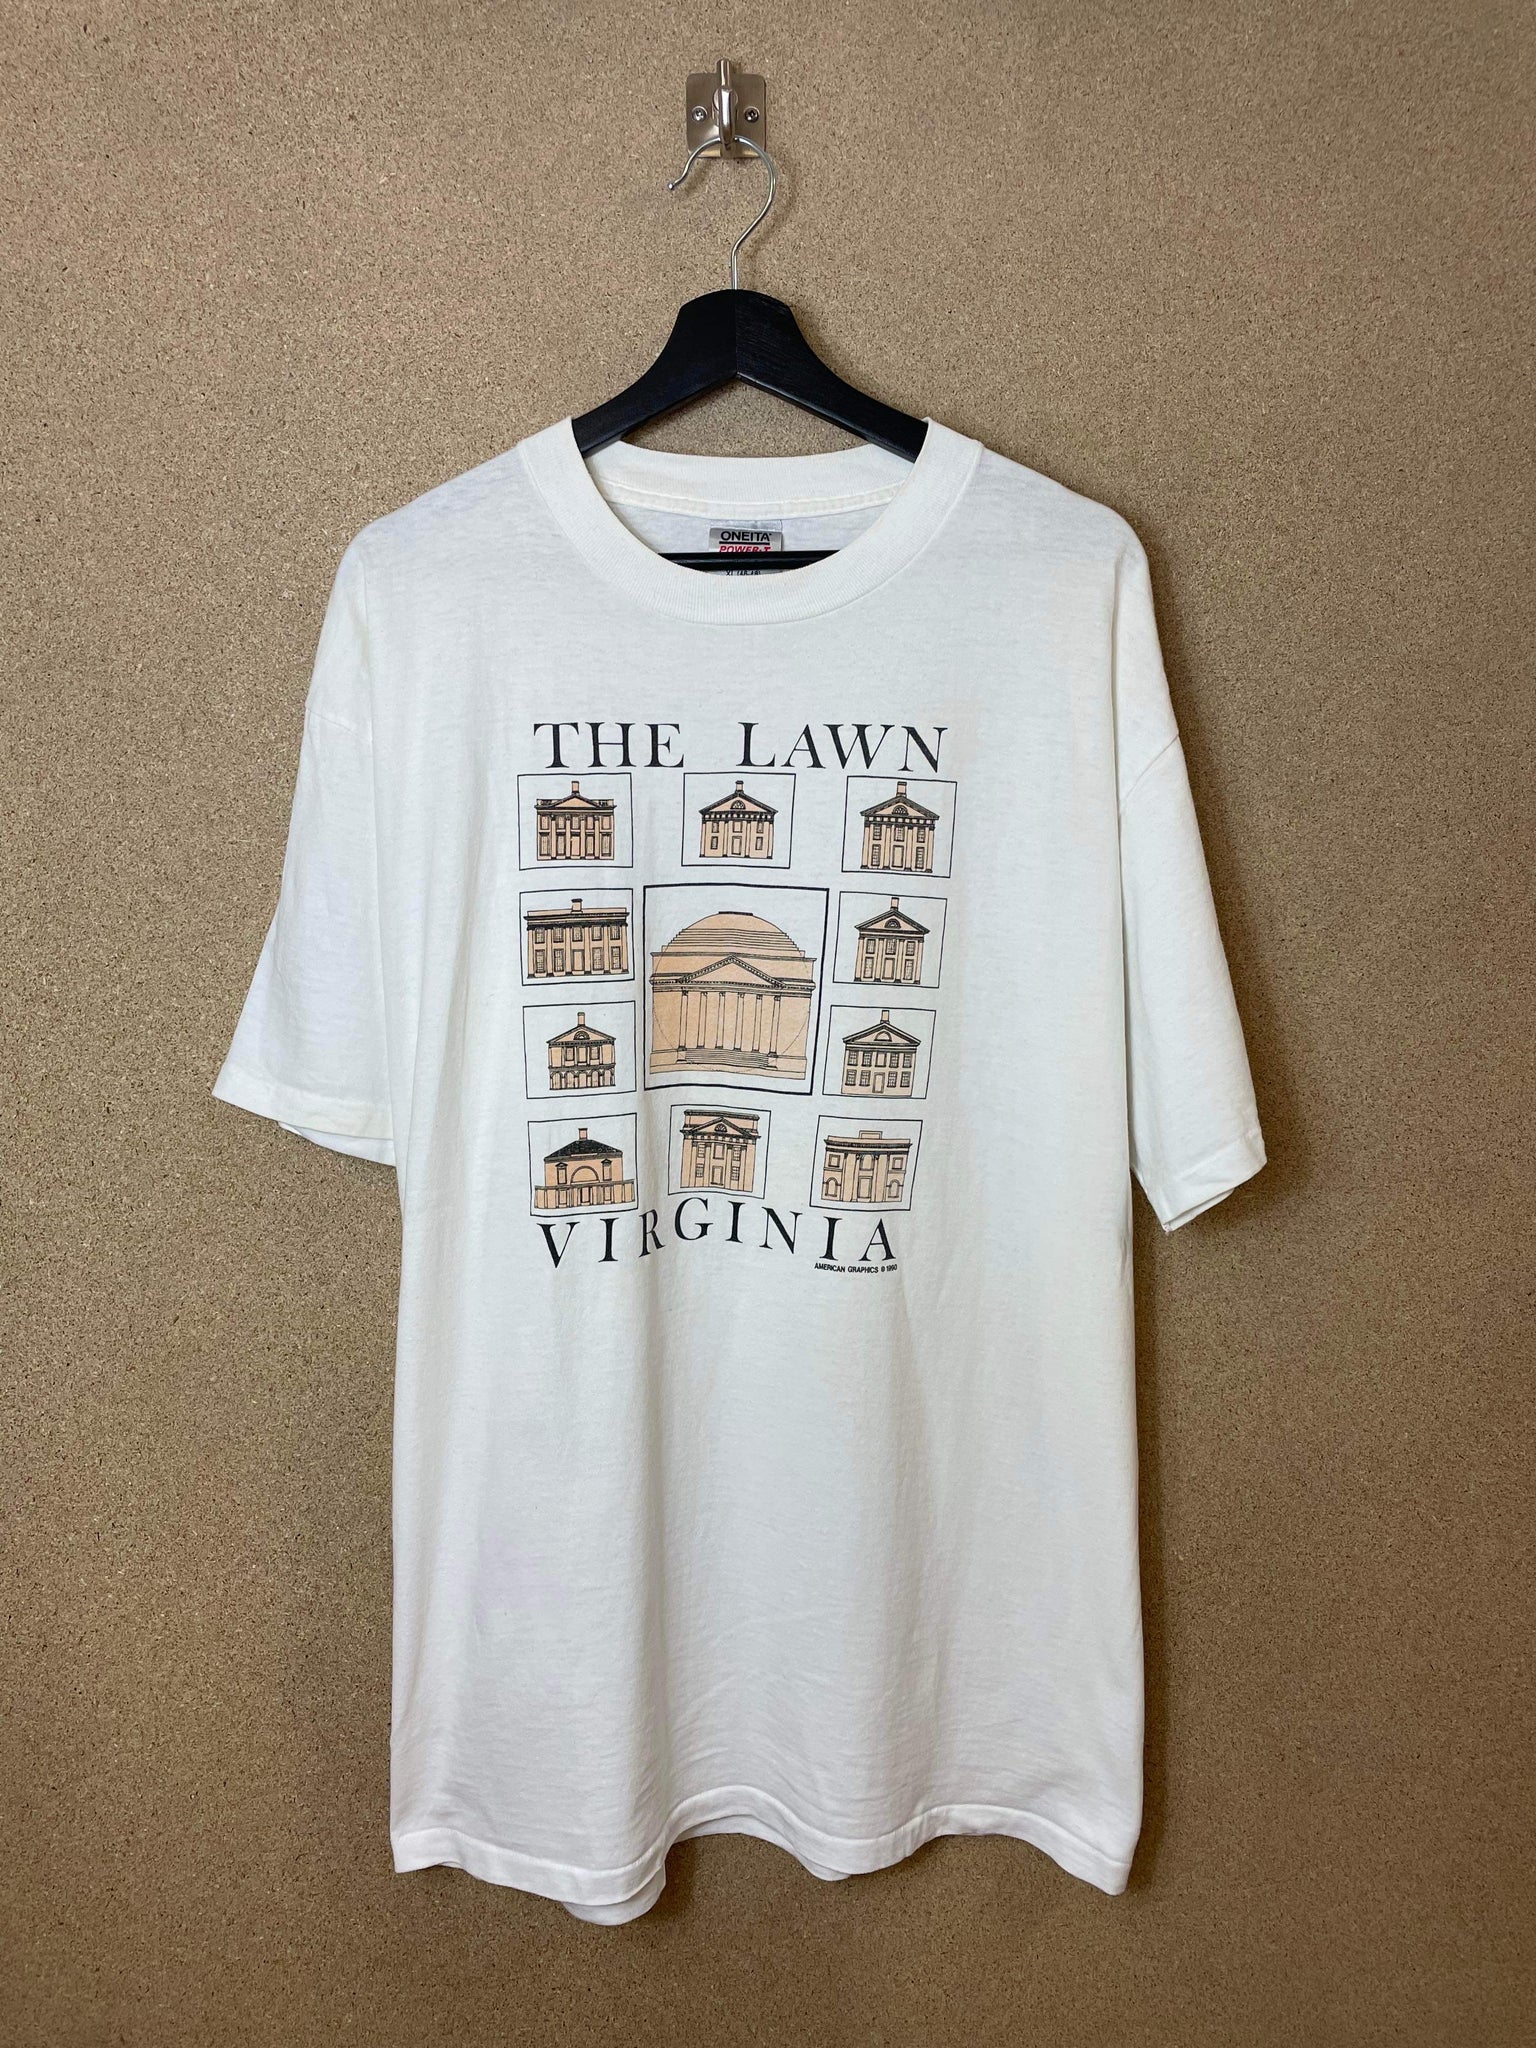 Vintage The Lawn Virginia 1990 Tee - XL